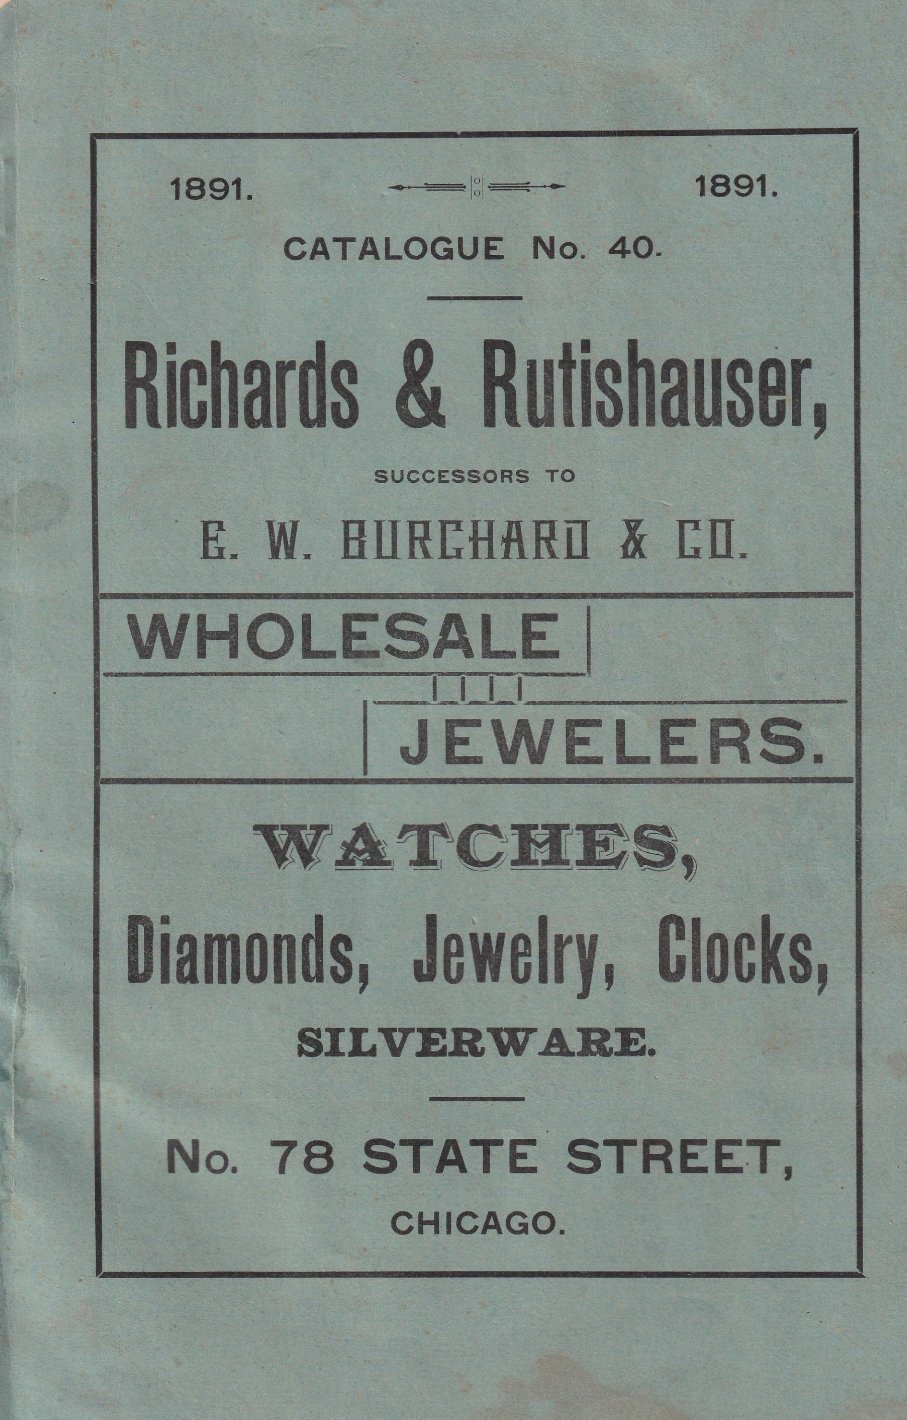 Richards & Rutishauser Catalogue No. 40 (1891) Cover Image